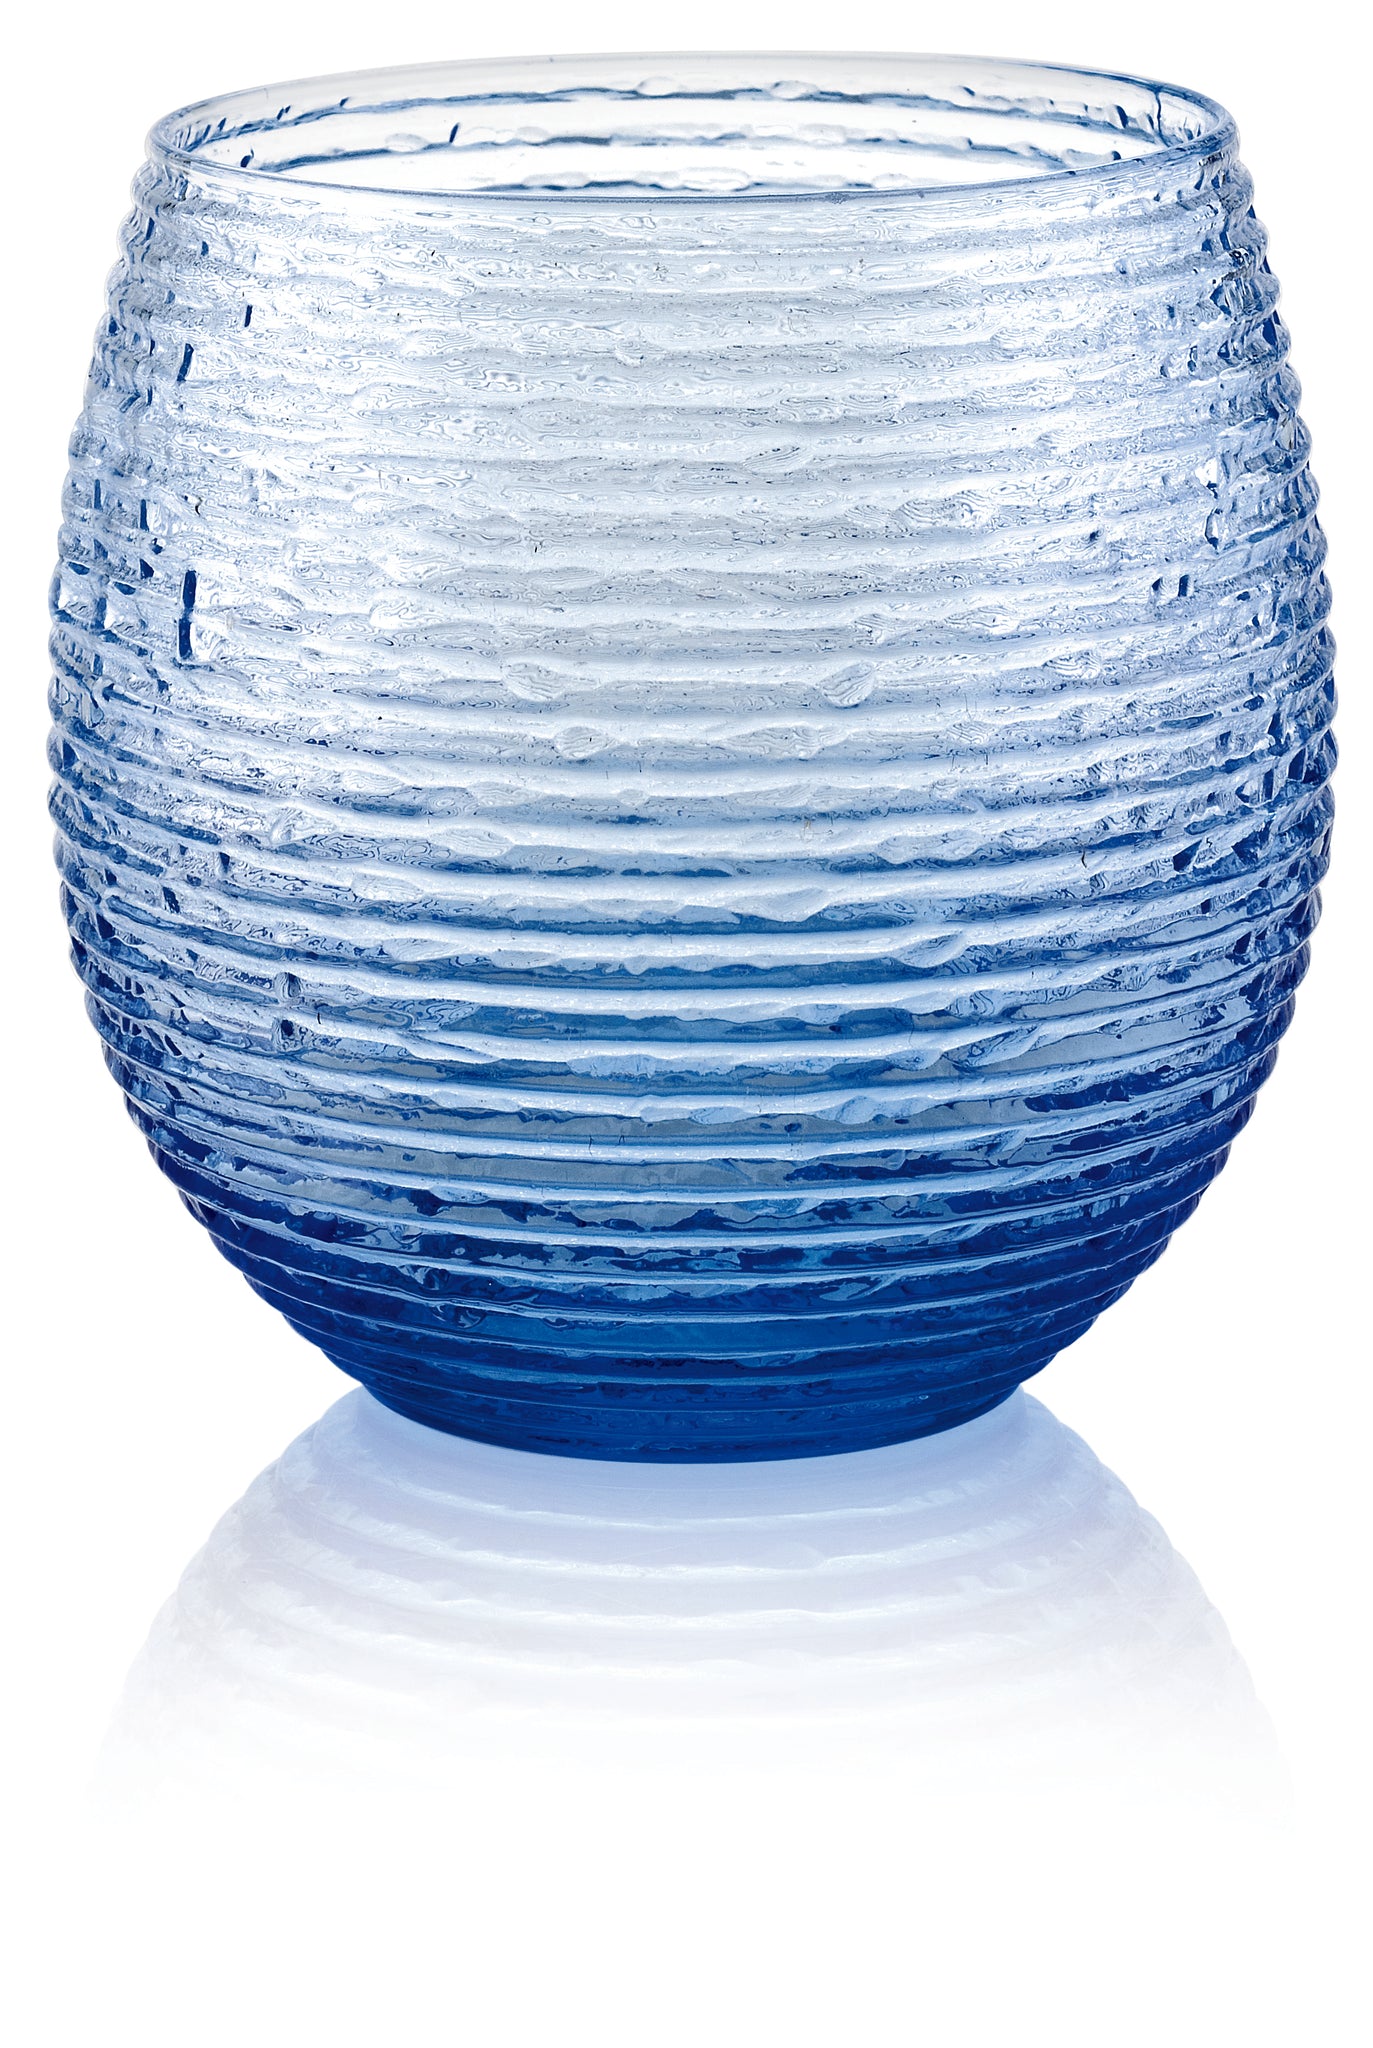 IVV Glassmakers Italia MULTICOLOR SET 6 TUMBLER PERIWINKLE oz. 8,5 5648.2